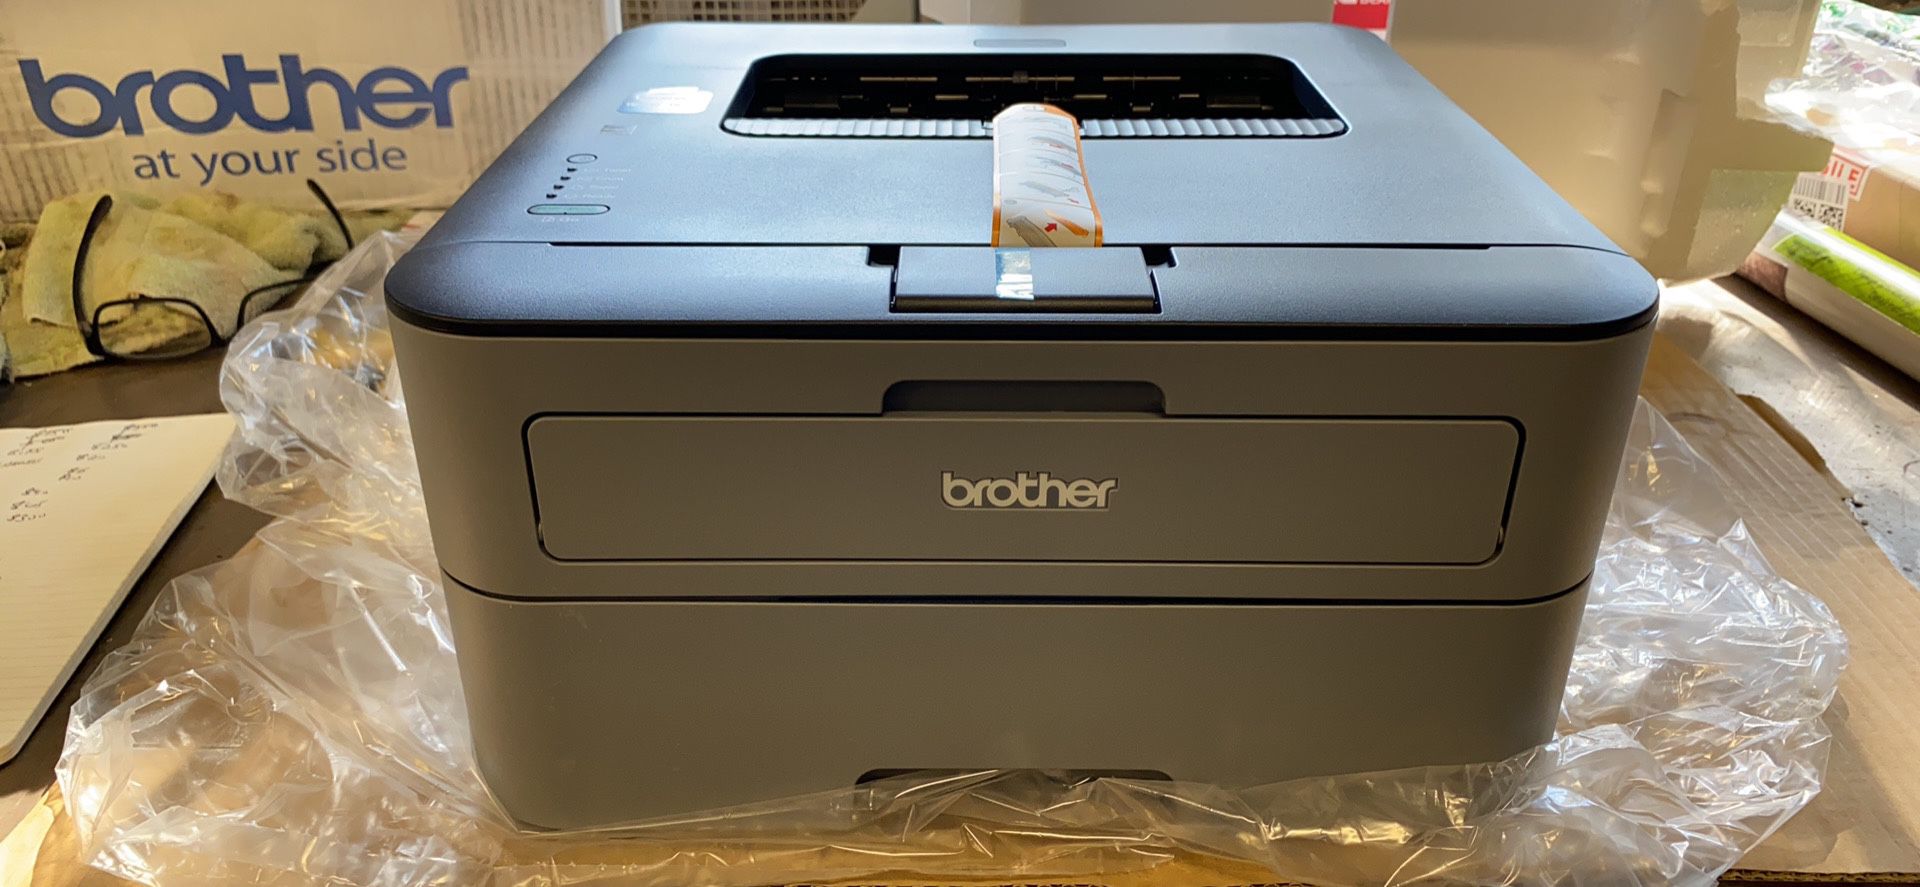 Brother hl-l2320d printer factory refurbished new unused